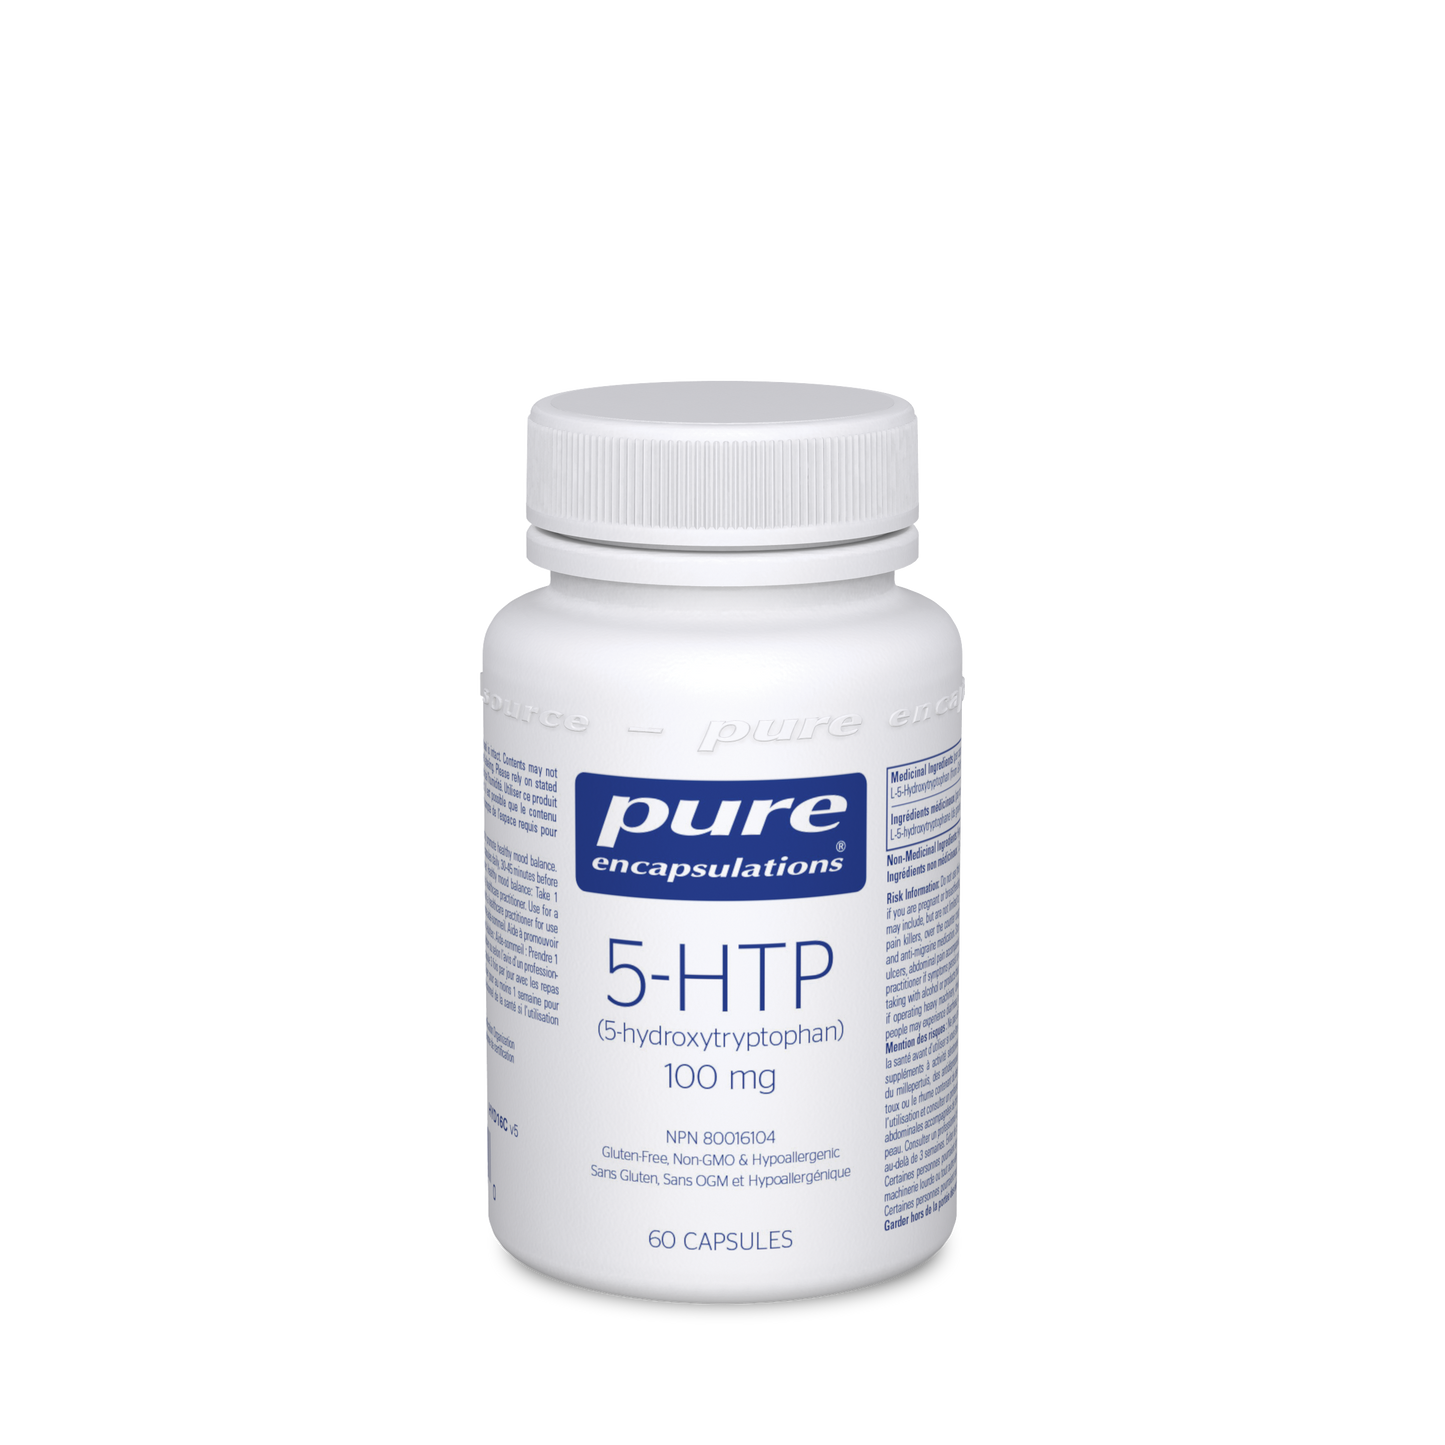 5-HTP 100 mg (5-Hydroxytryptophan)